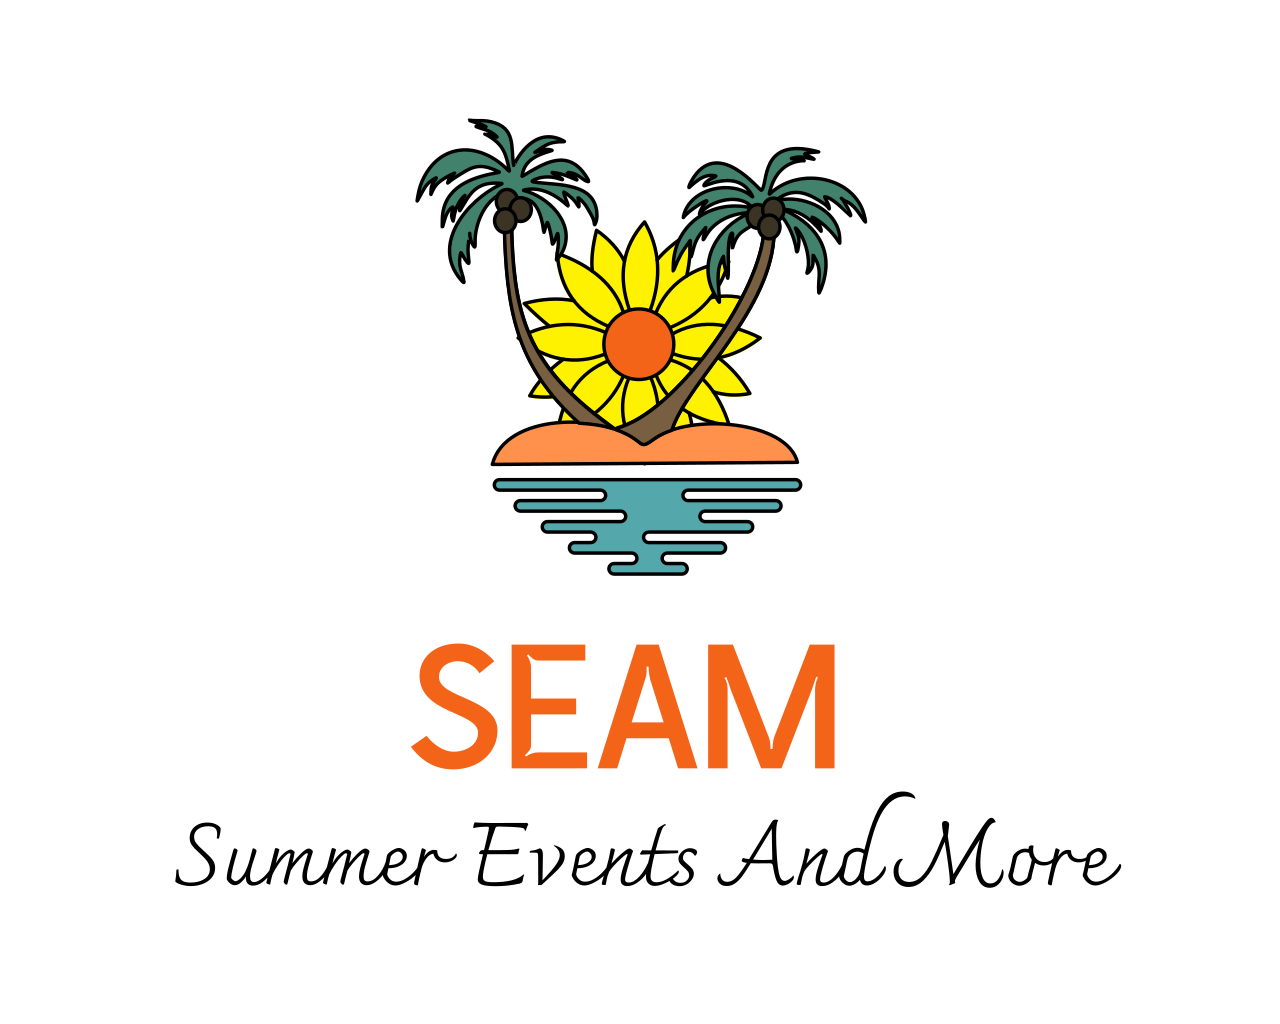 SEAM's logo